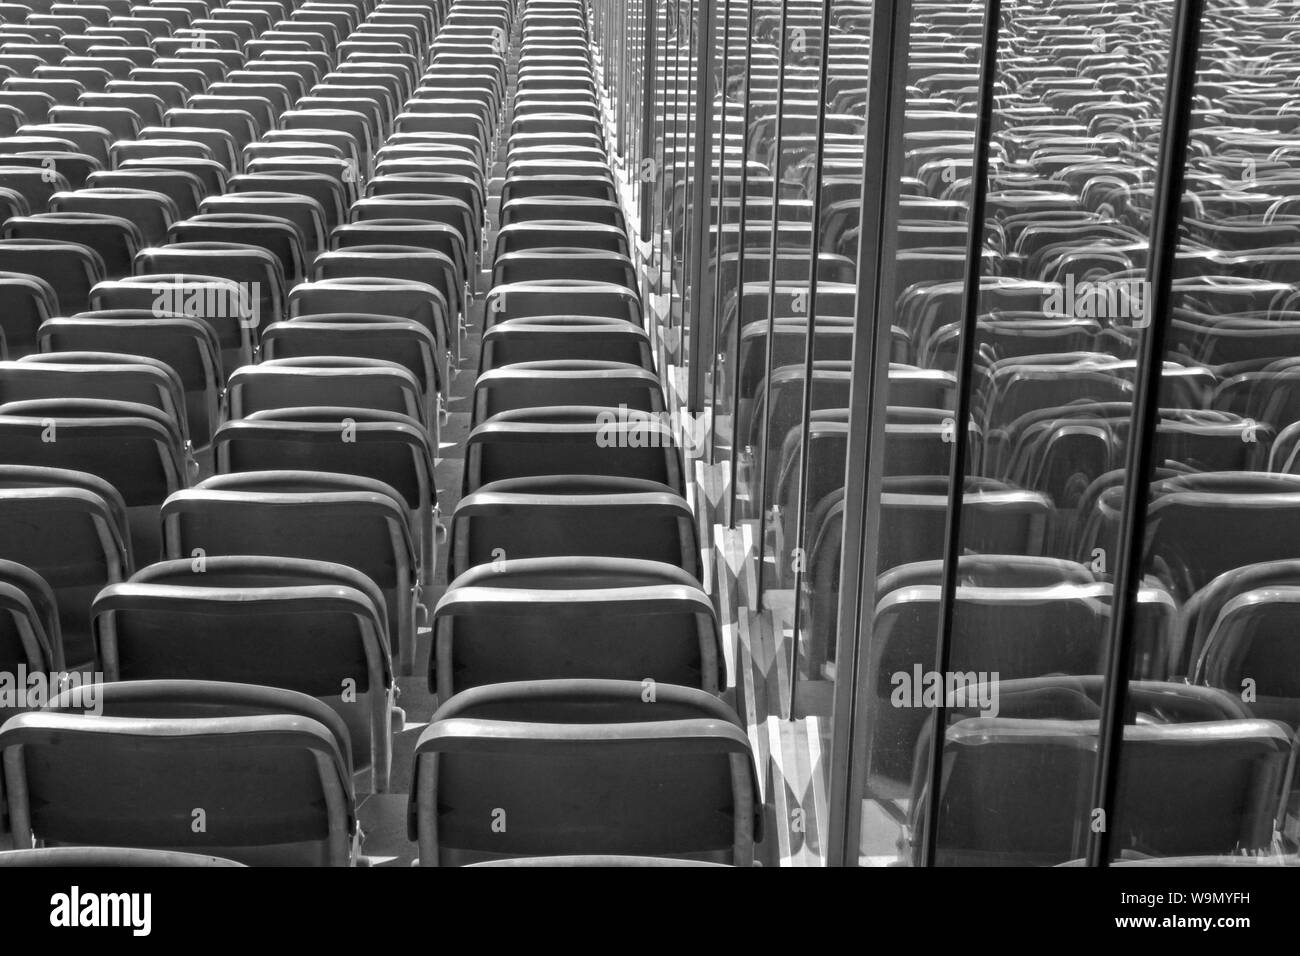 Olympiastadion Berlin Sitze in einem Glas reflektiert. Symmetrie. Stockfoto